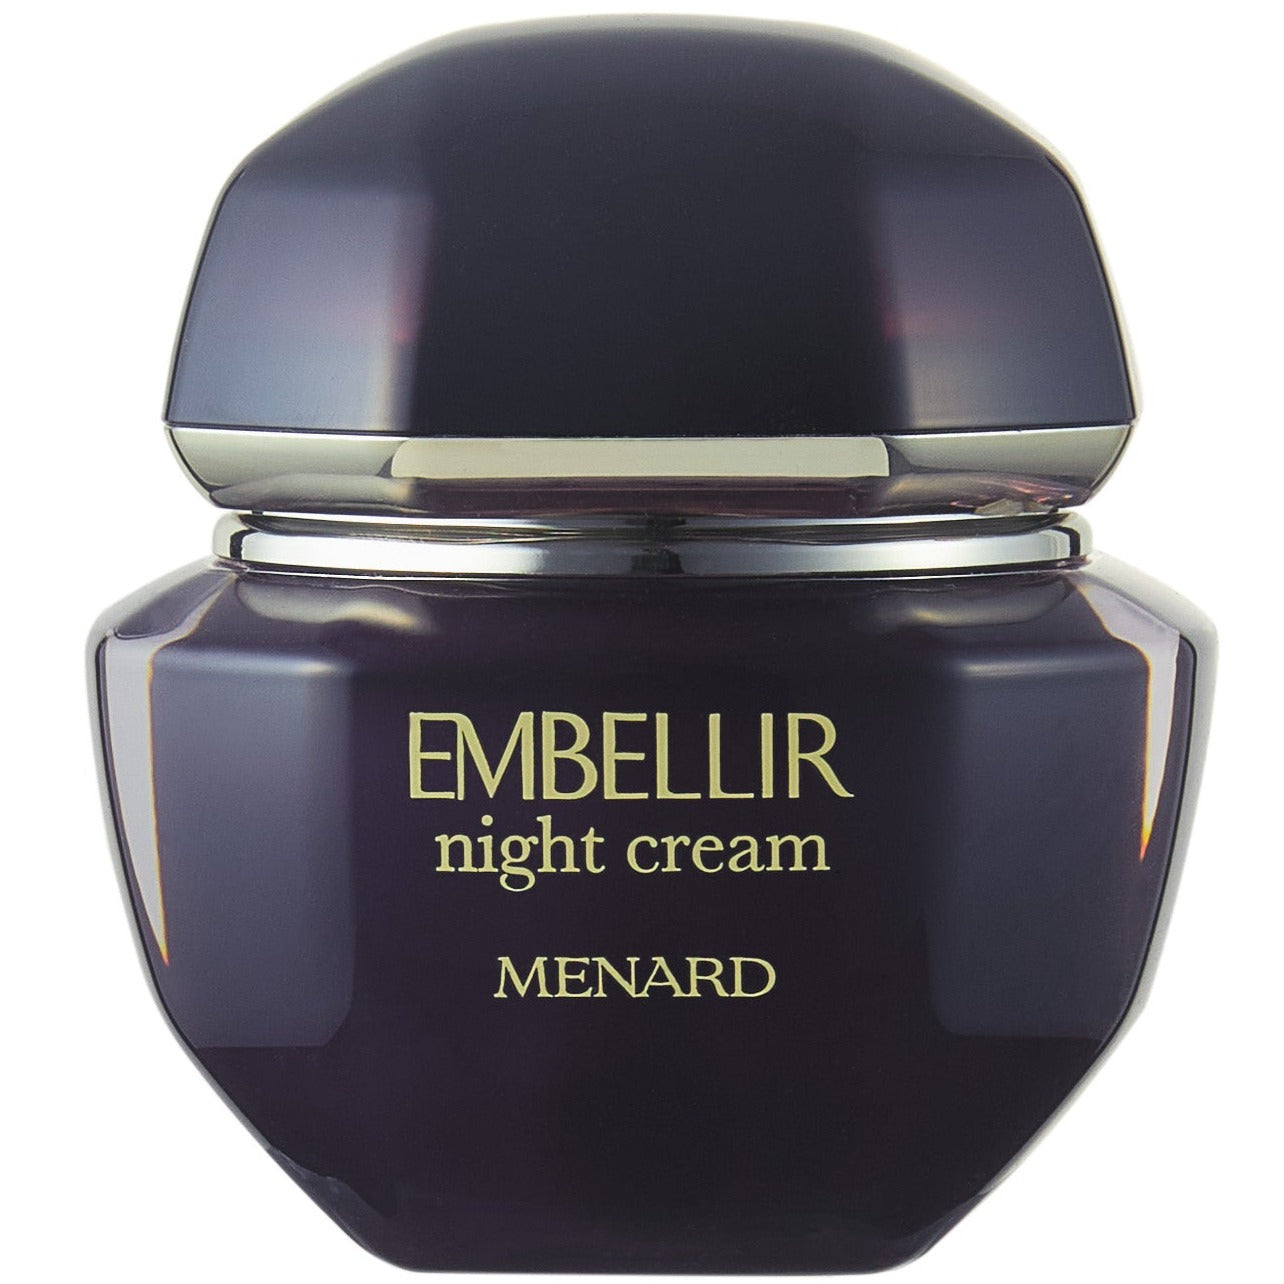 Embellir Night Cream